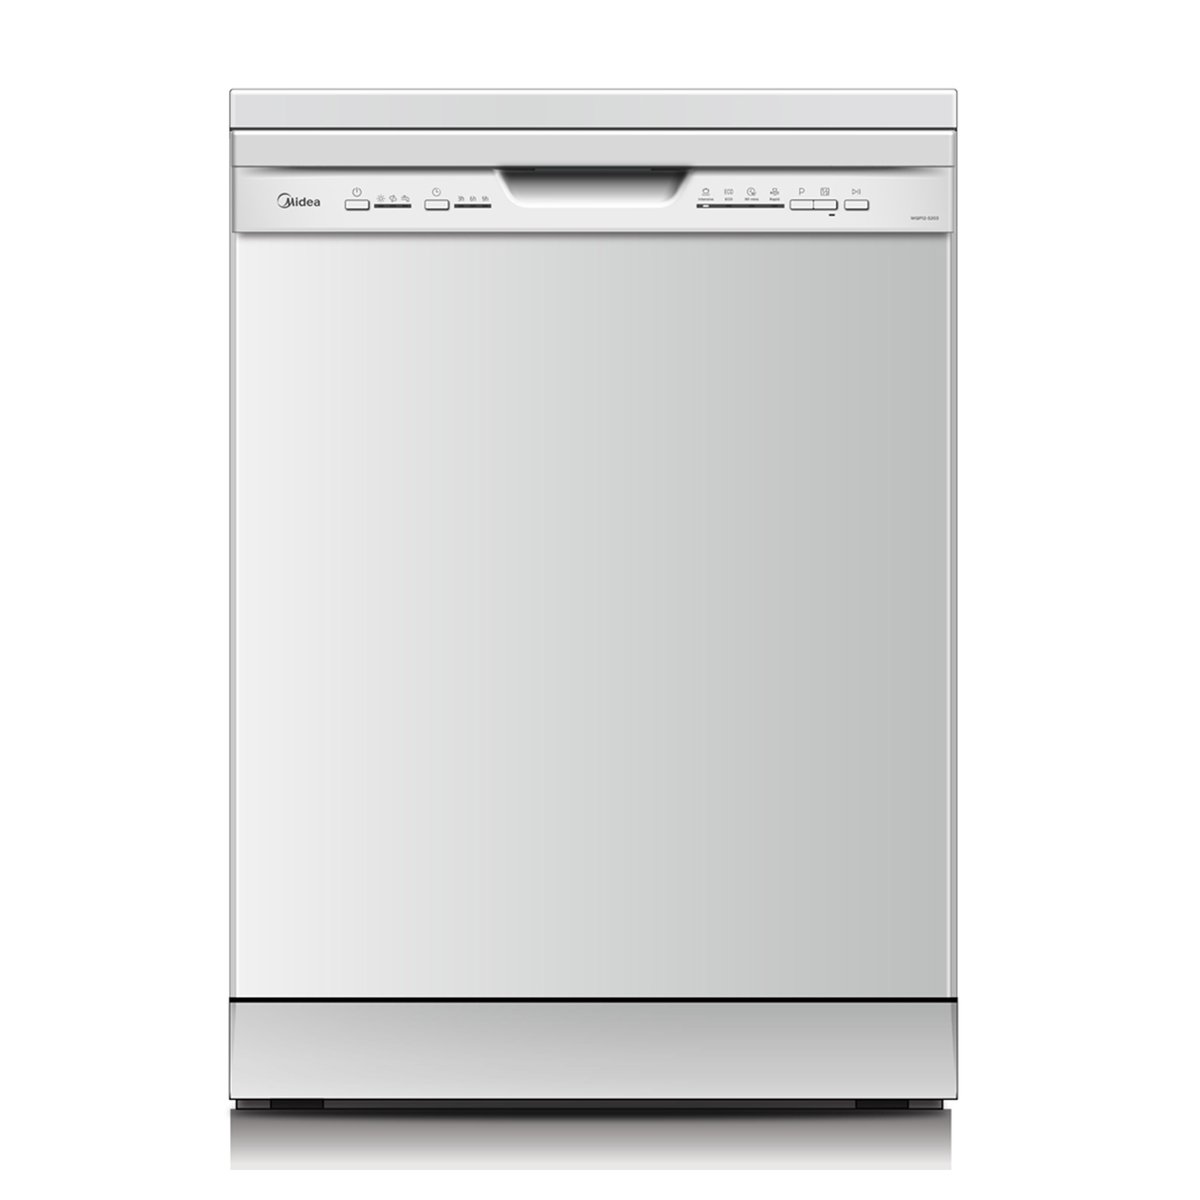 Midea Dishwasher WQP12-5203-W 5Programs